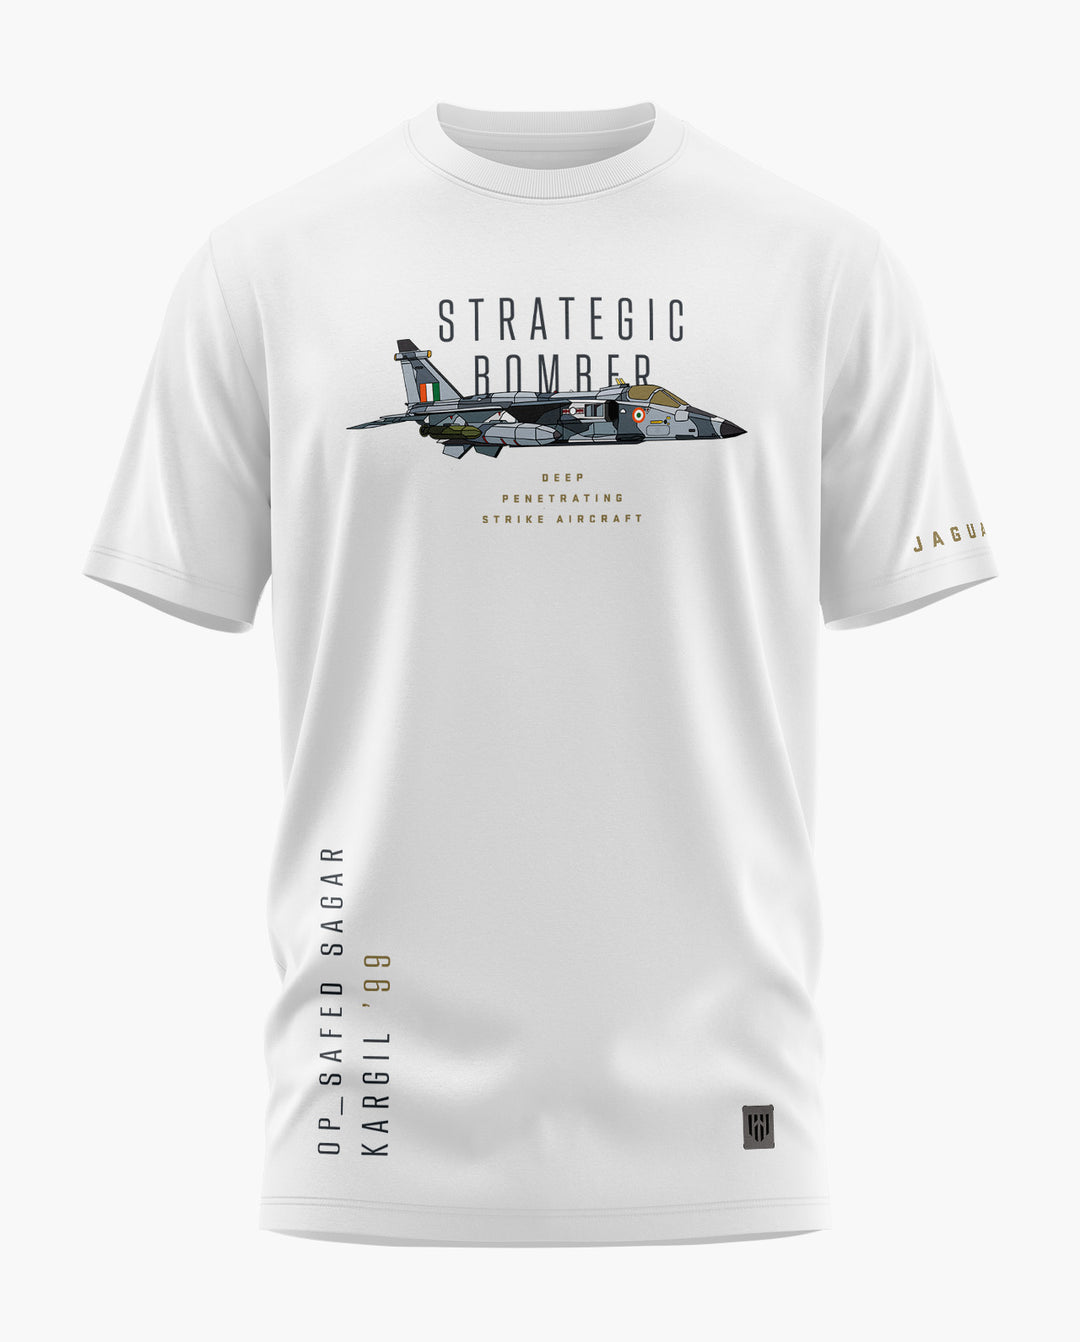 THE STRATEGIC BOMBER-JAGUAR T-Shirt